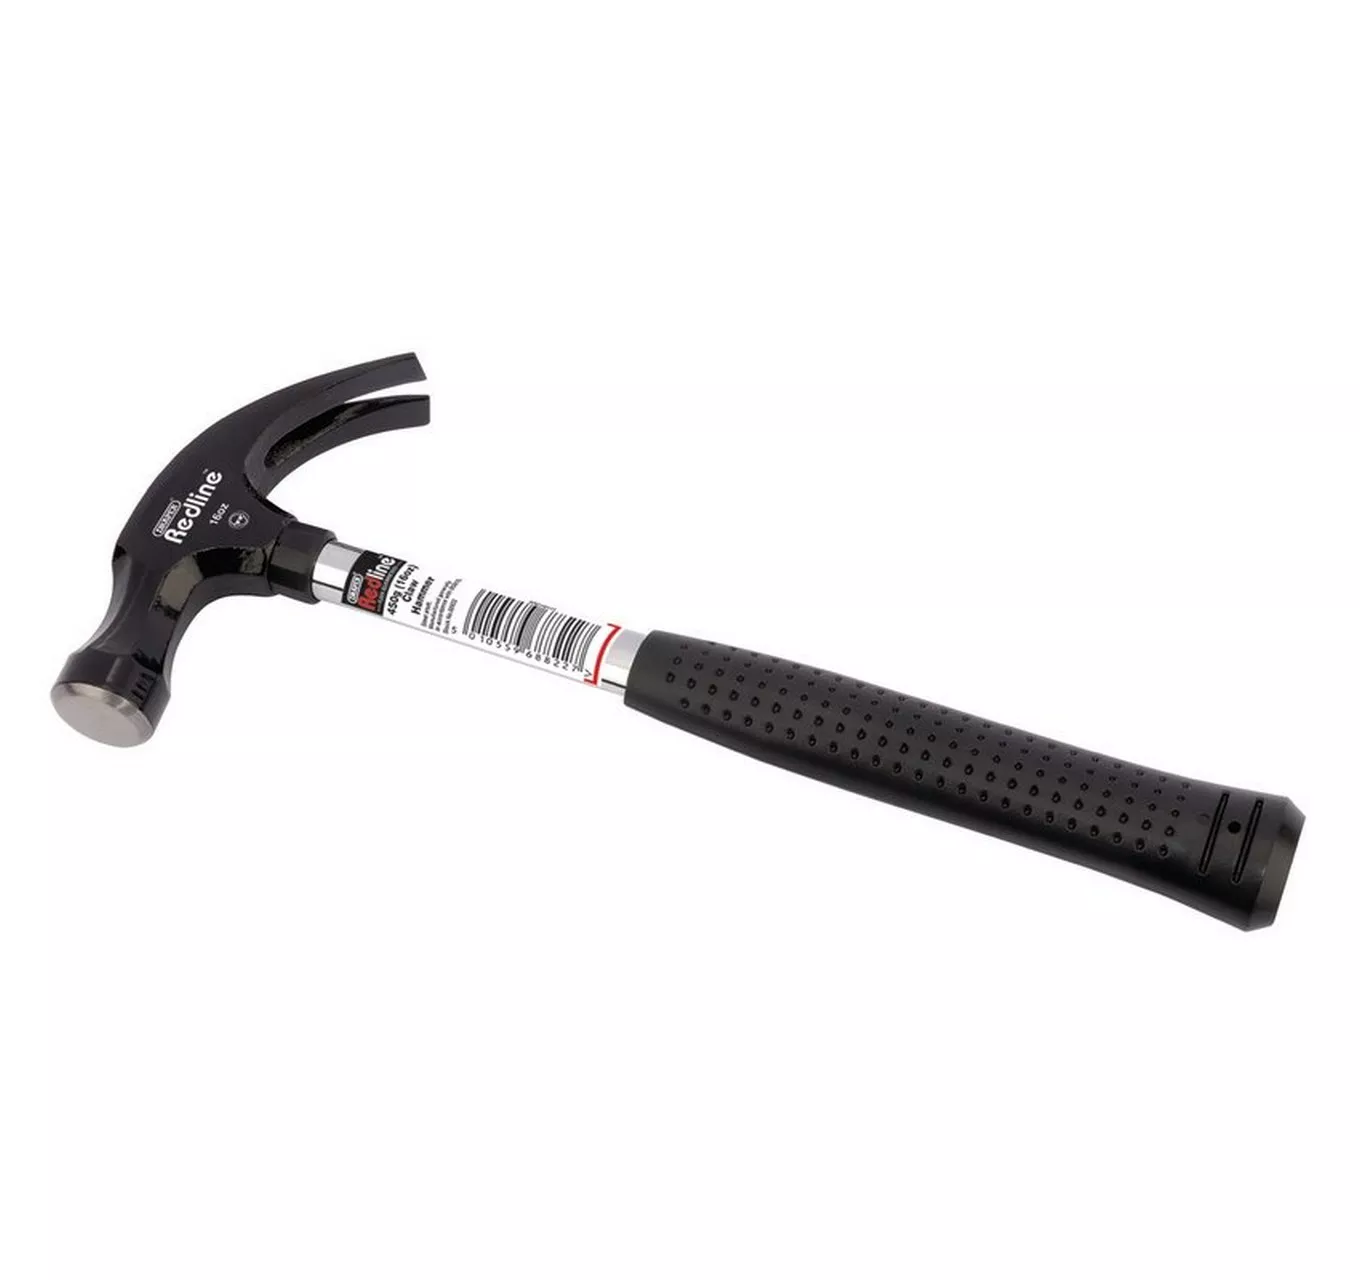 Redline Claw Hammer, 450g/16oz